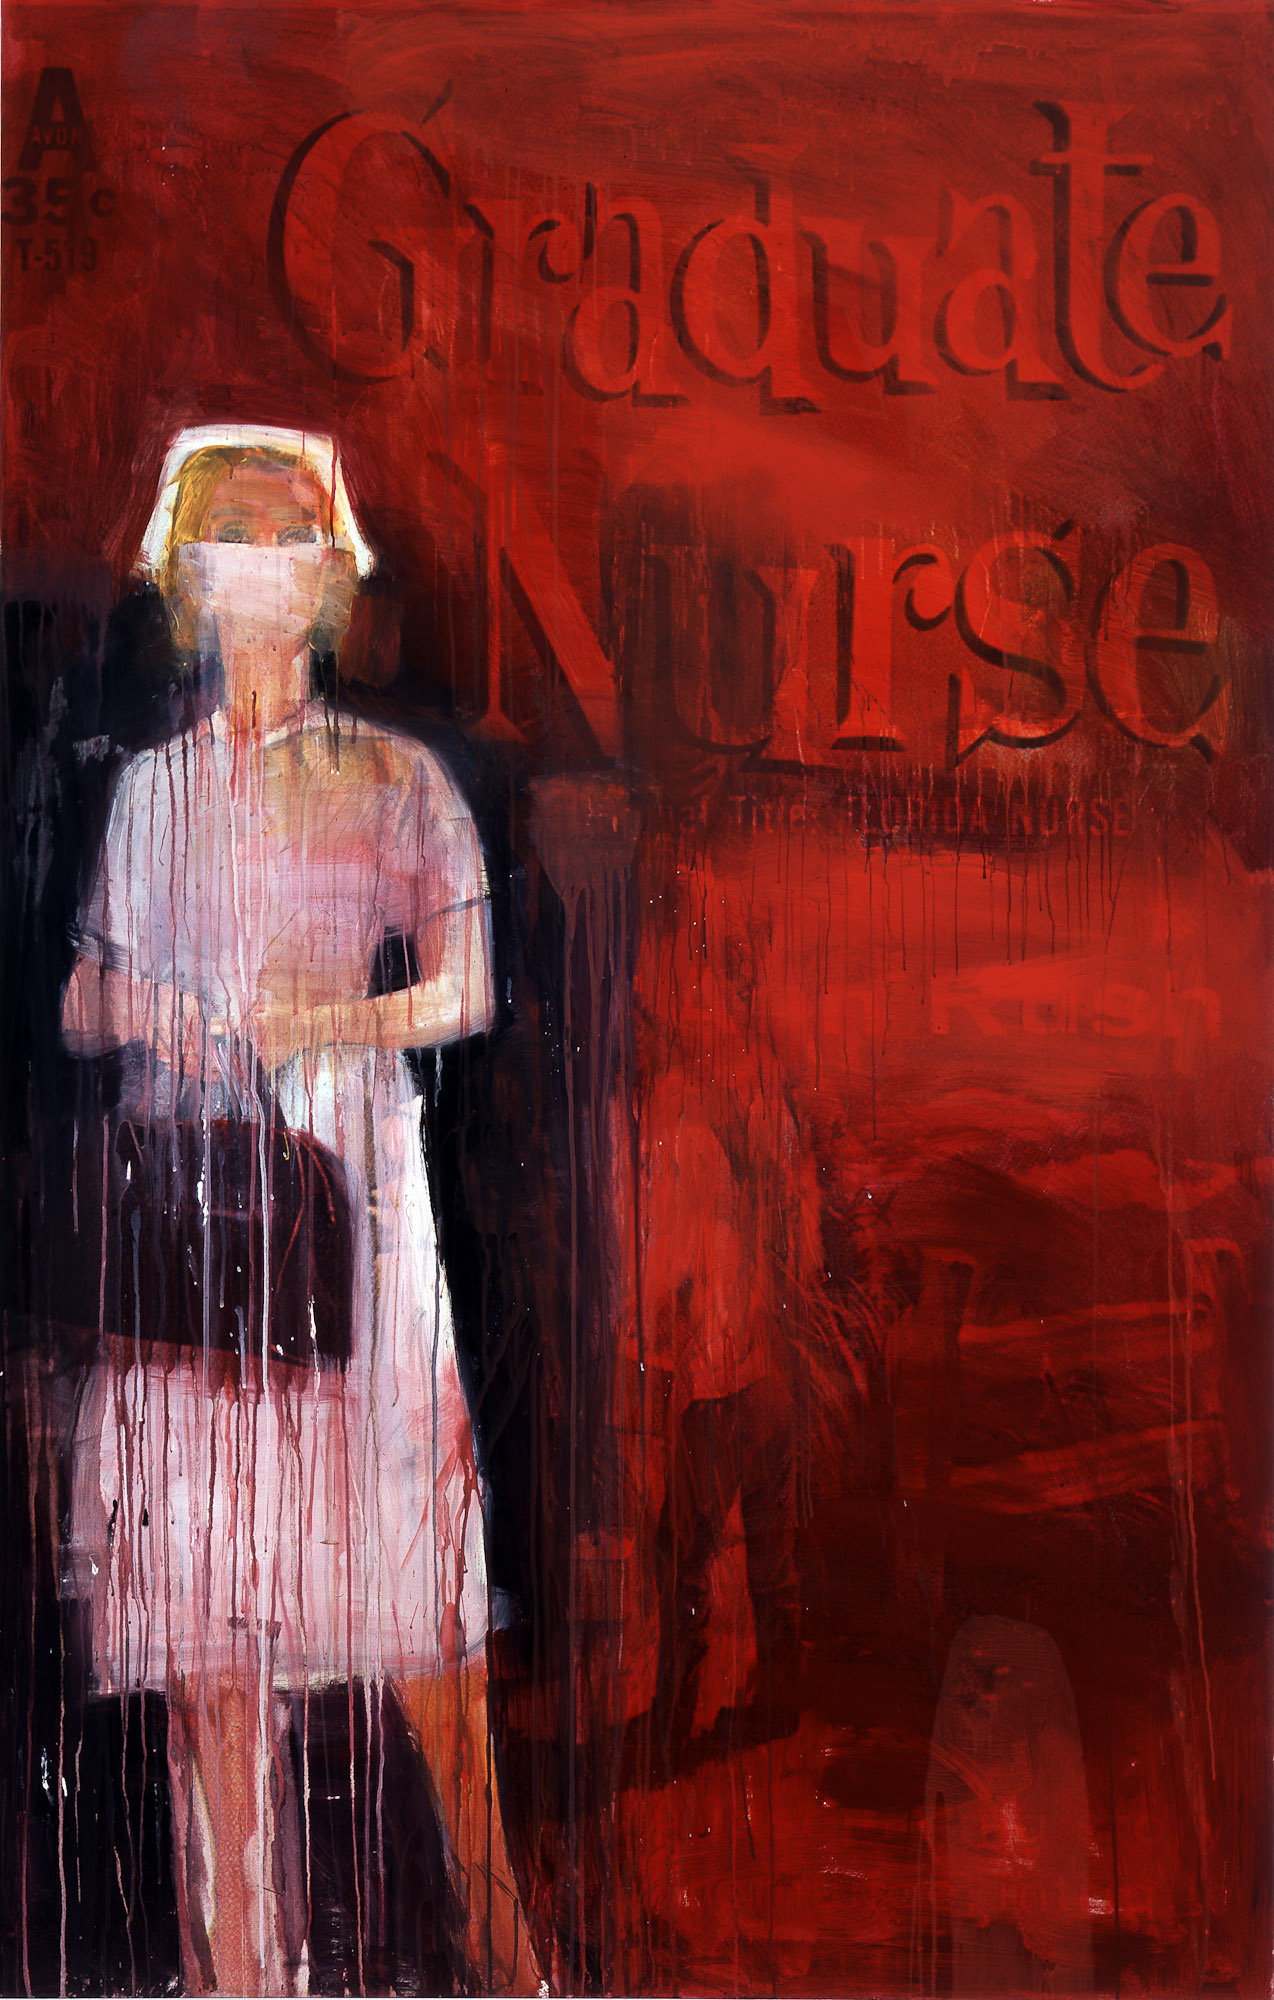 Richard Prince: Nurse Paintings - - Exhibitions - Skarstedt Gallery